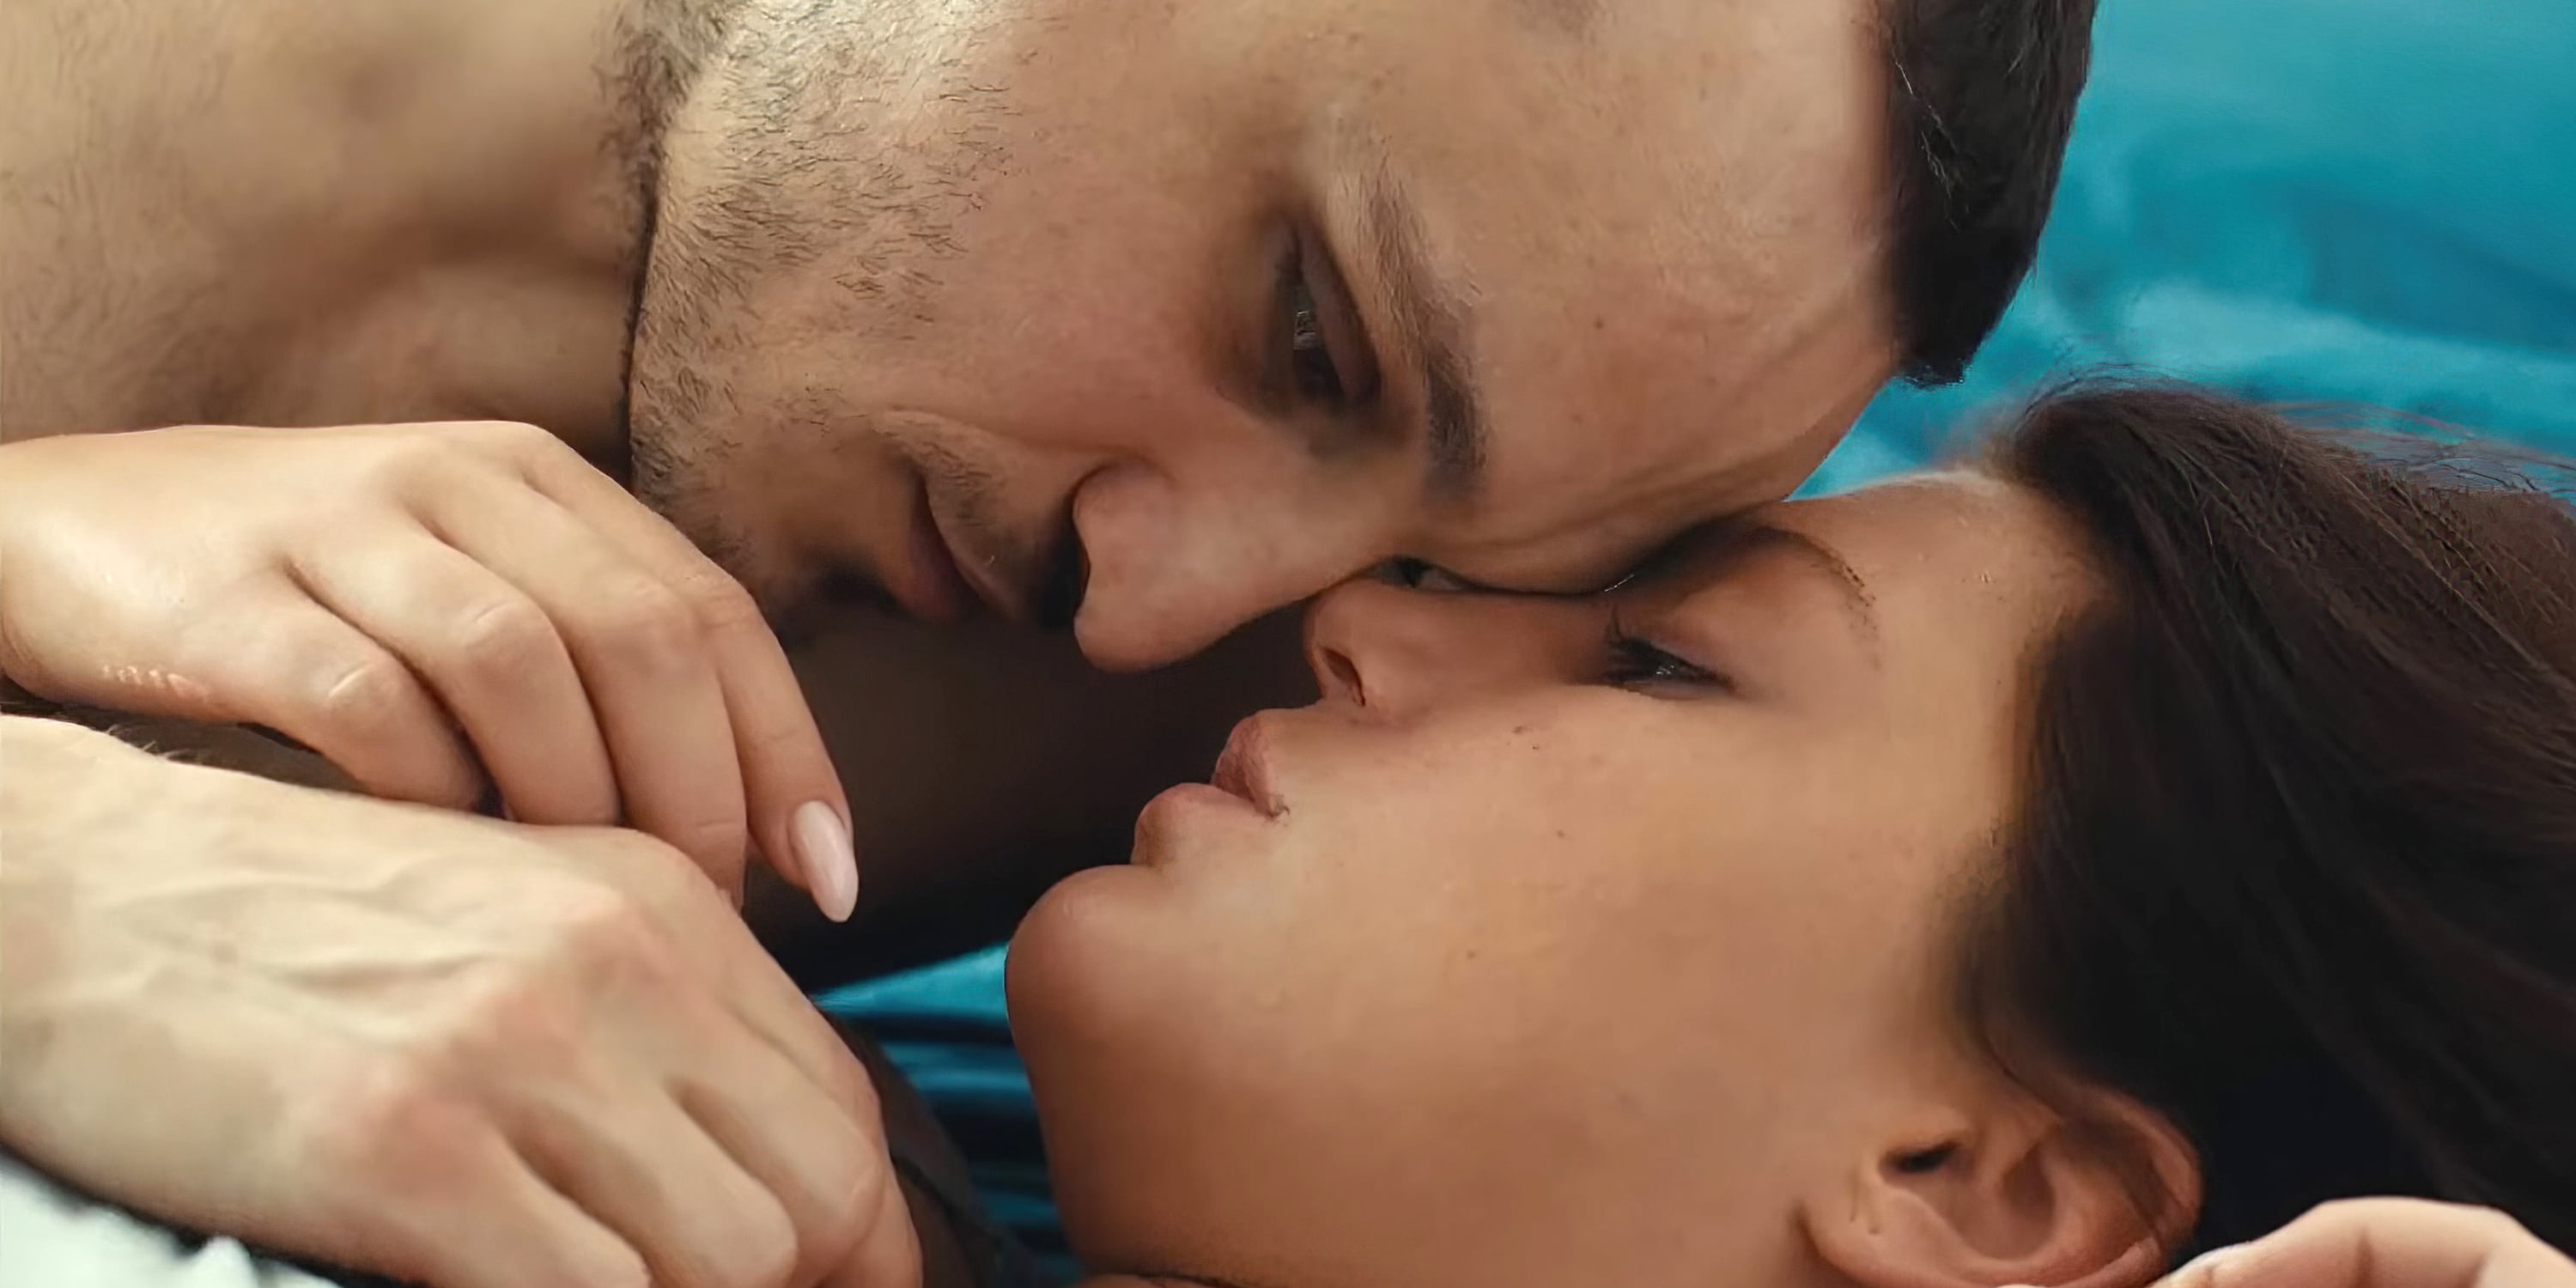 Japan Booking Blue Sex Film - Best NC-17 Movies to Watch | POPSUGAR Love & Sex